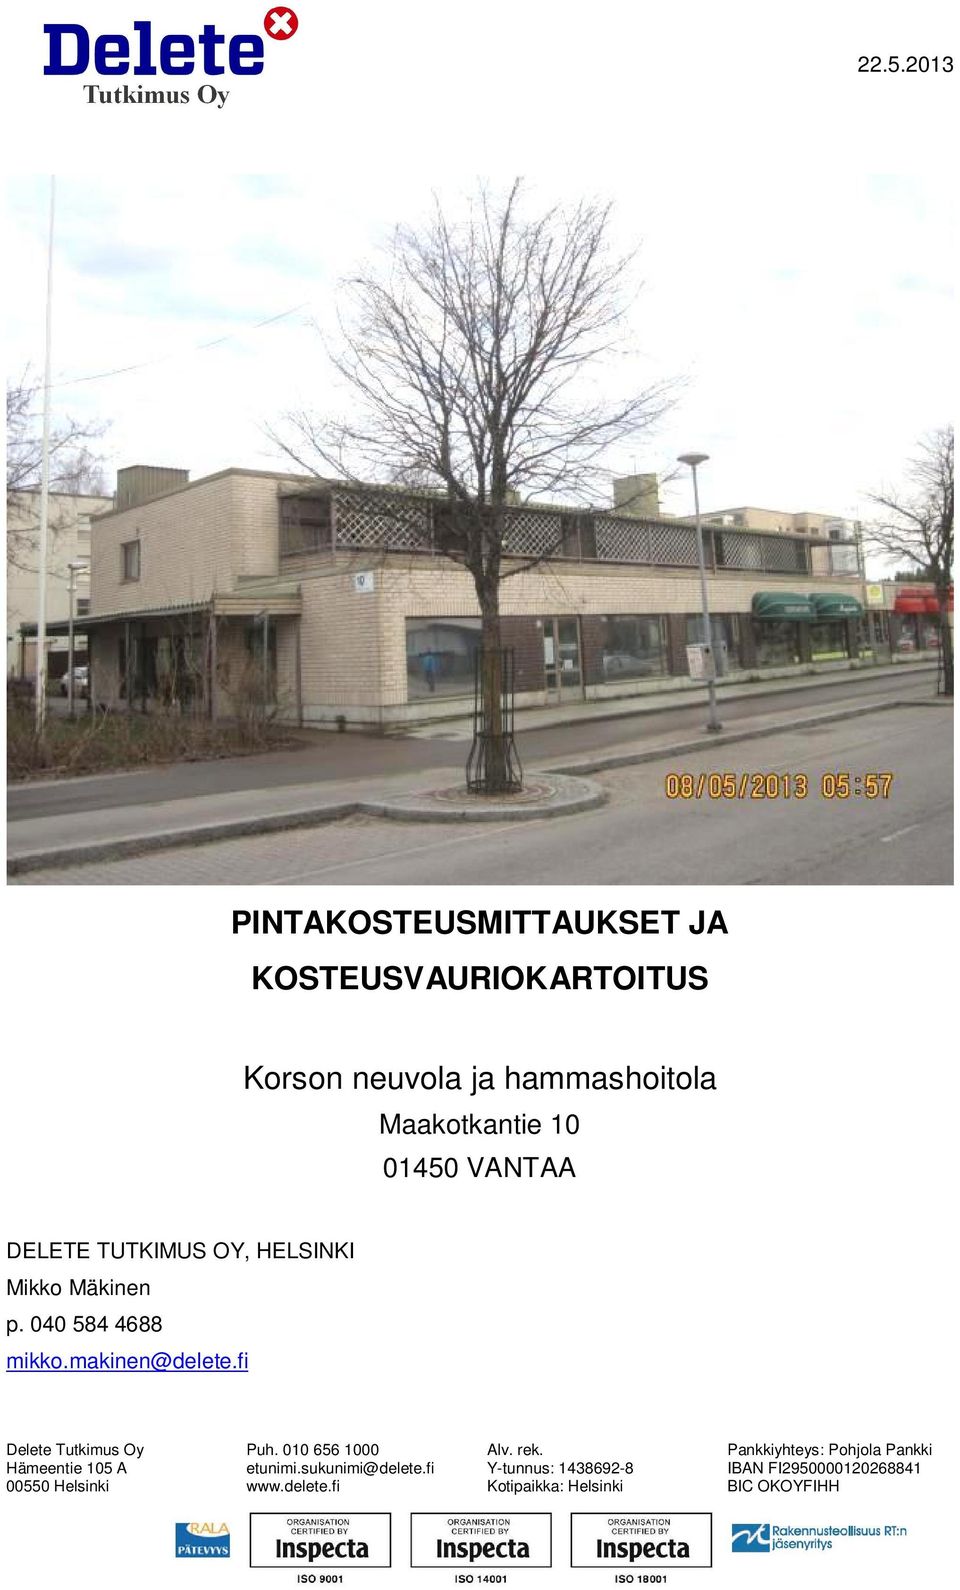 fi Delete Tutkimus Oy Hämeentie 105 A 00550 Helsinki Puh. 010 656 1000 etunimi.sukunimi@delete.fi www.